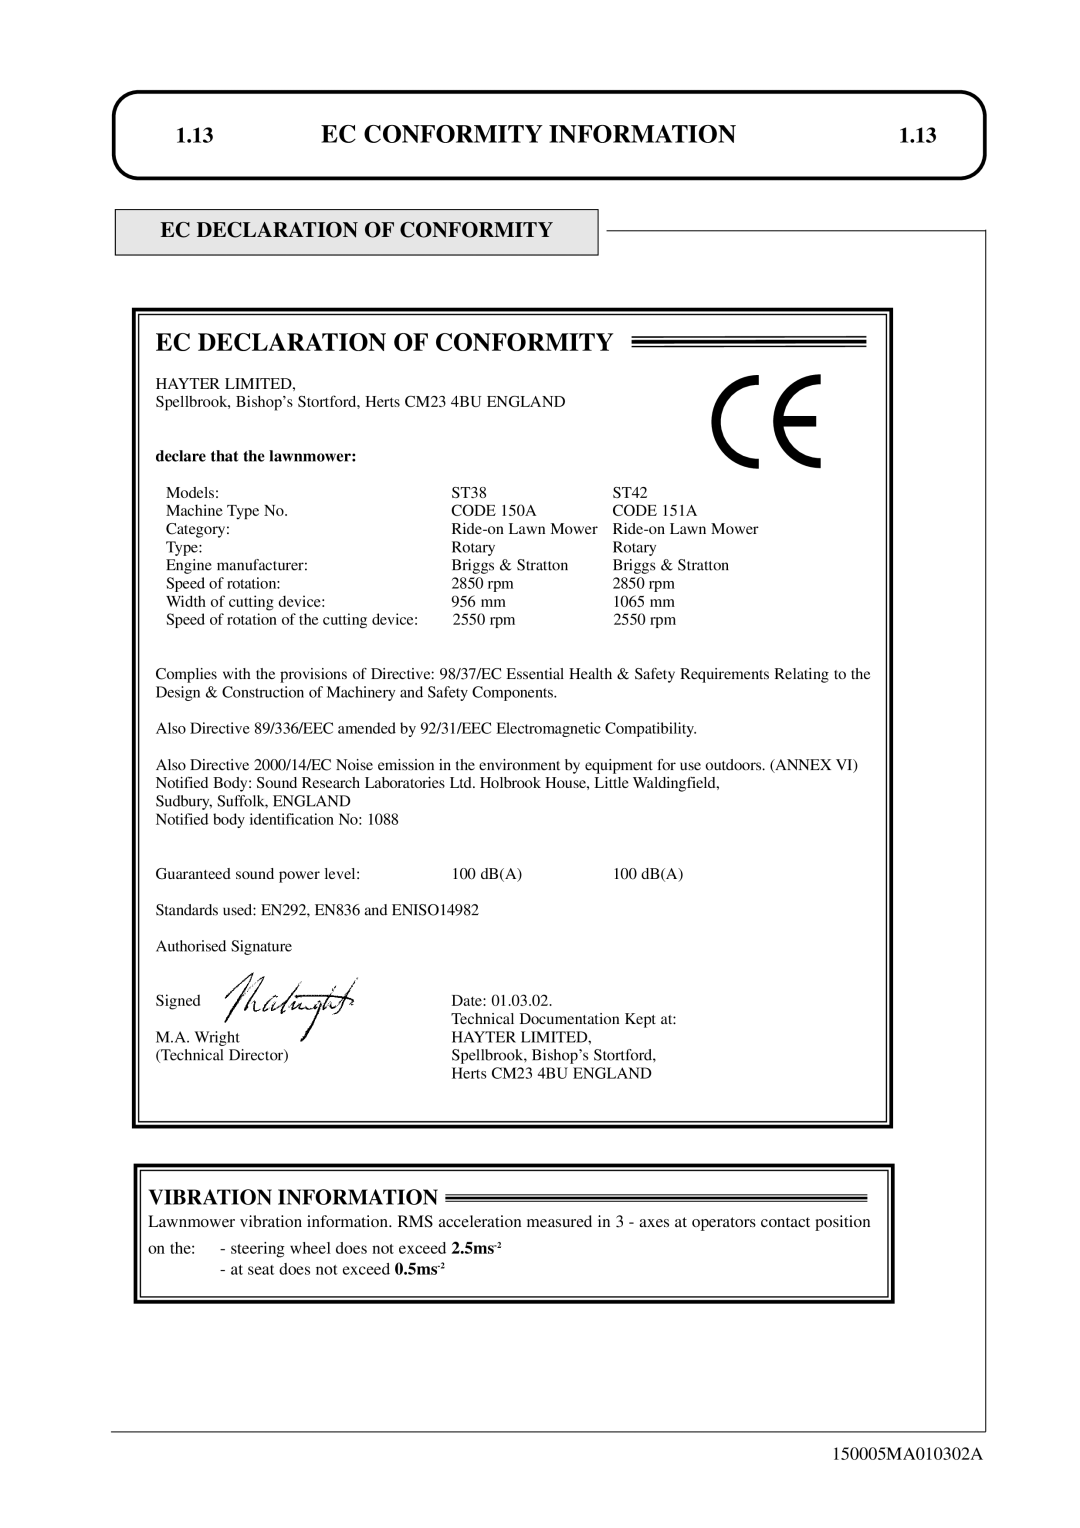 Hayter Mowers SST38/ST42 Ec Conformity Information, Ec Declaration Of Conformity, 1.13, Vibration Information 